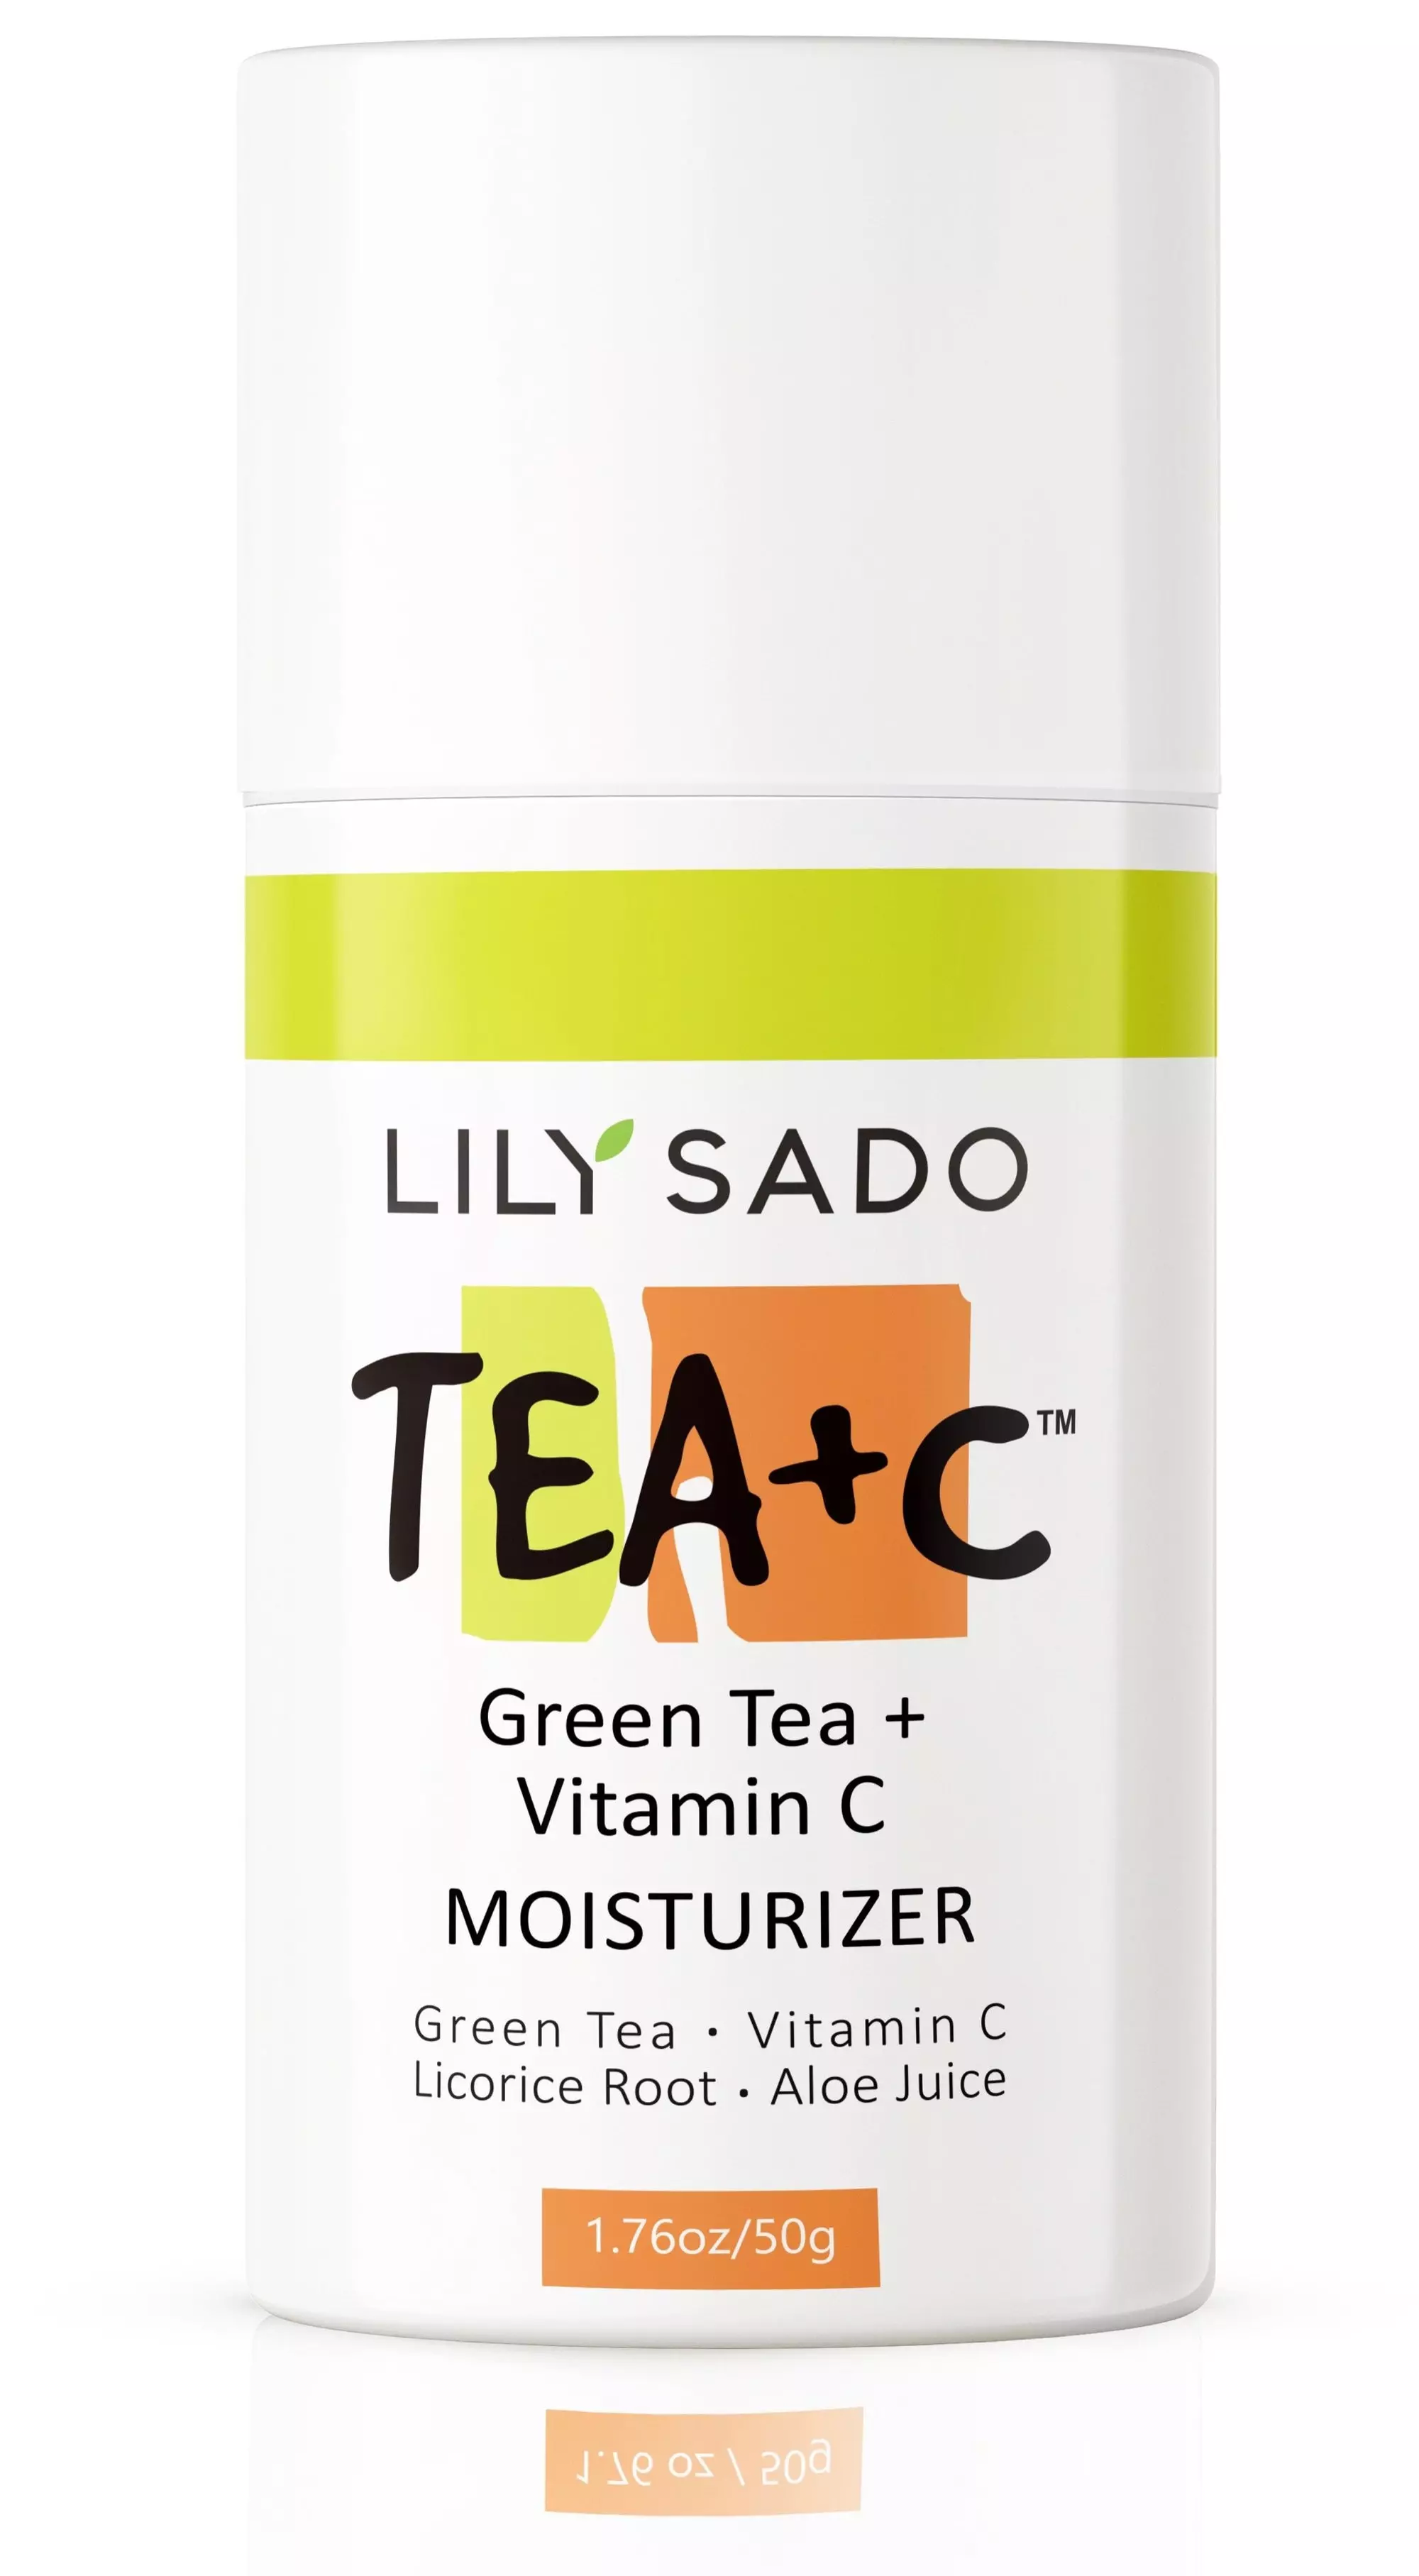 Lily Sado Green Tea + Vitamin C Moisturizer